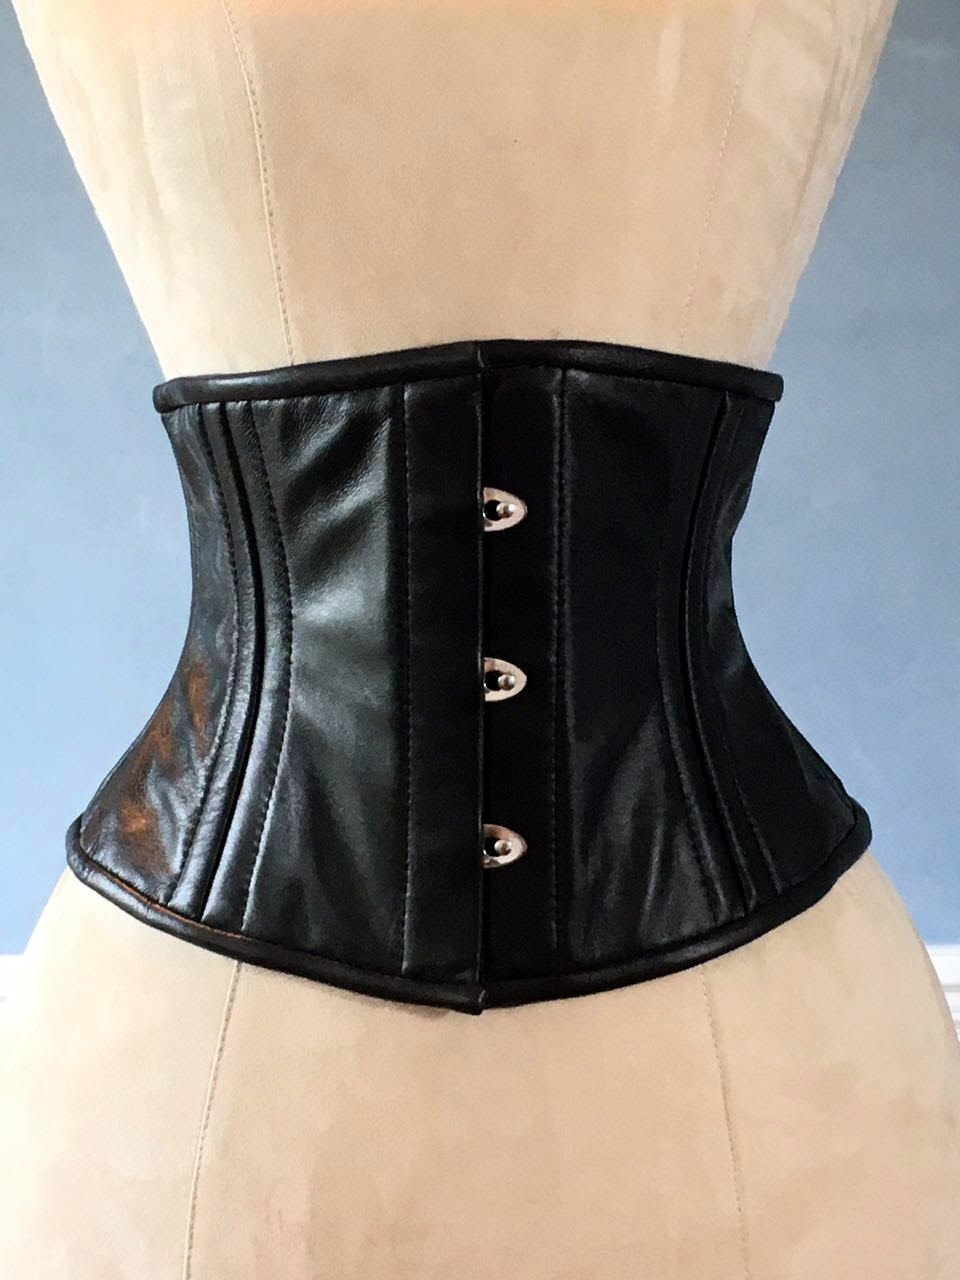  Kranchungel Corsets for Women Gothic Shoulder Straps